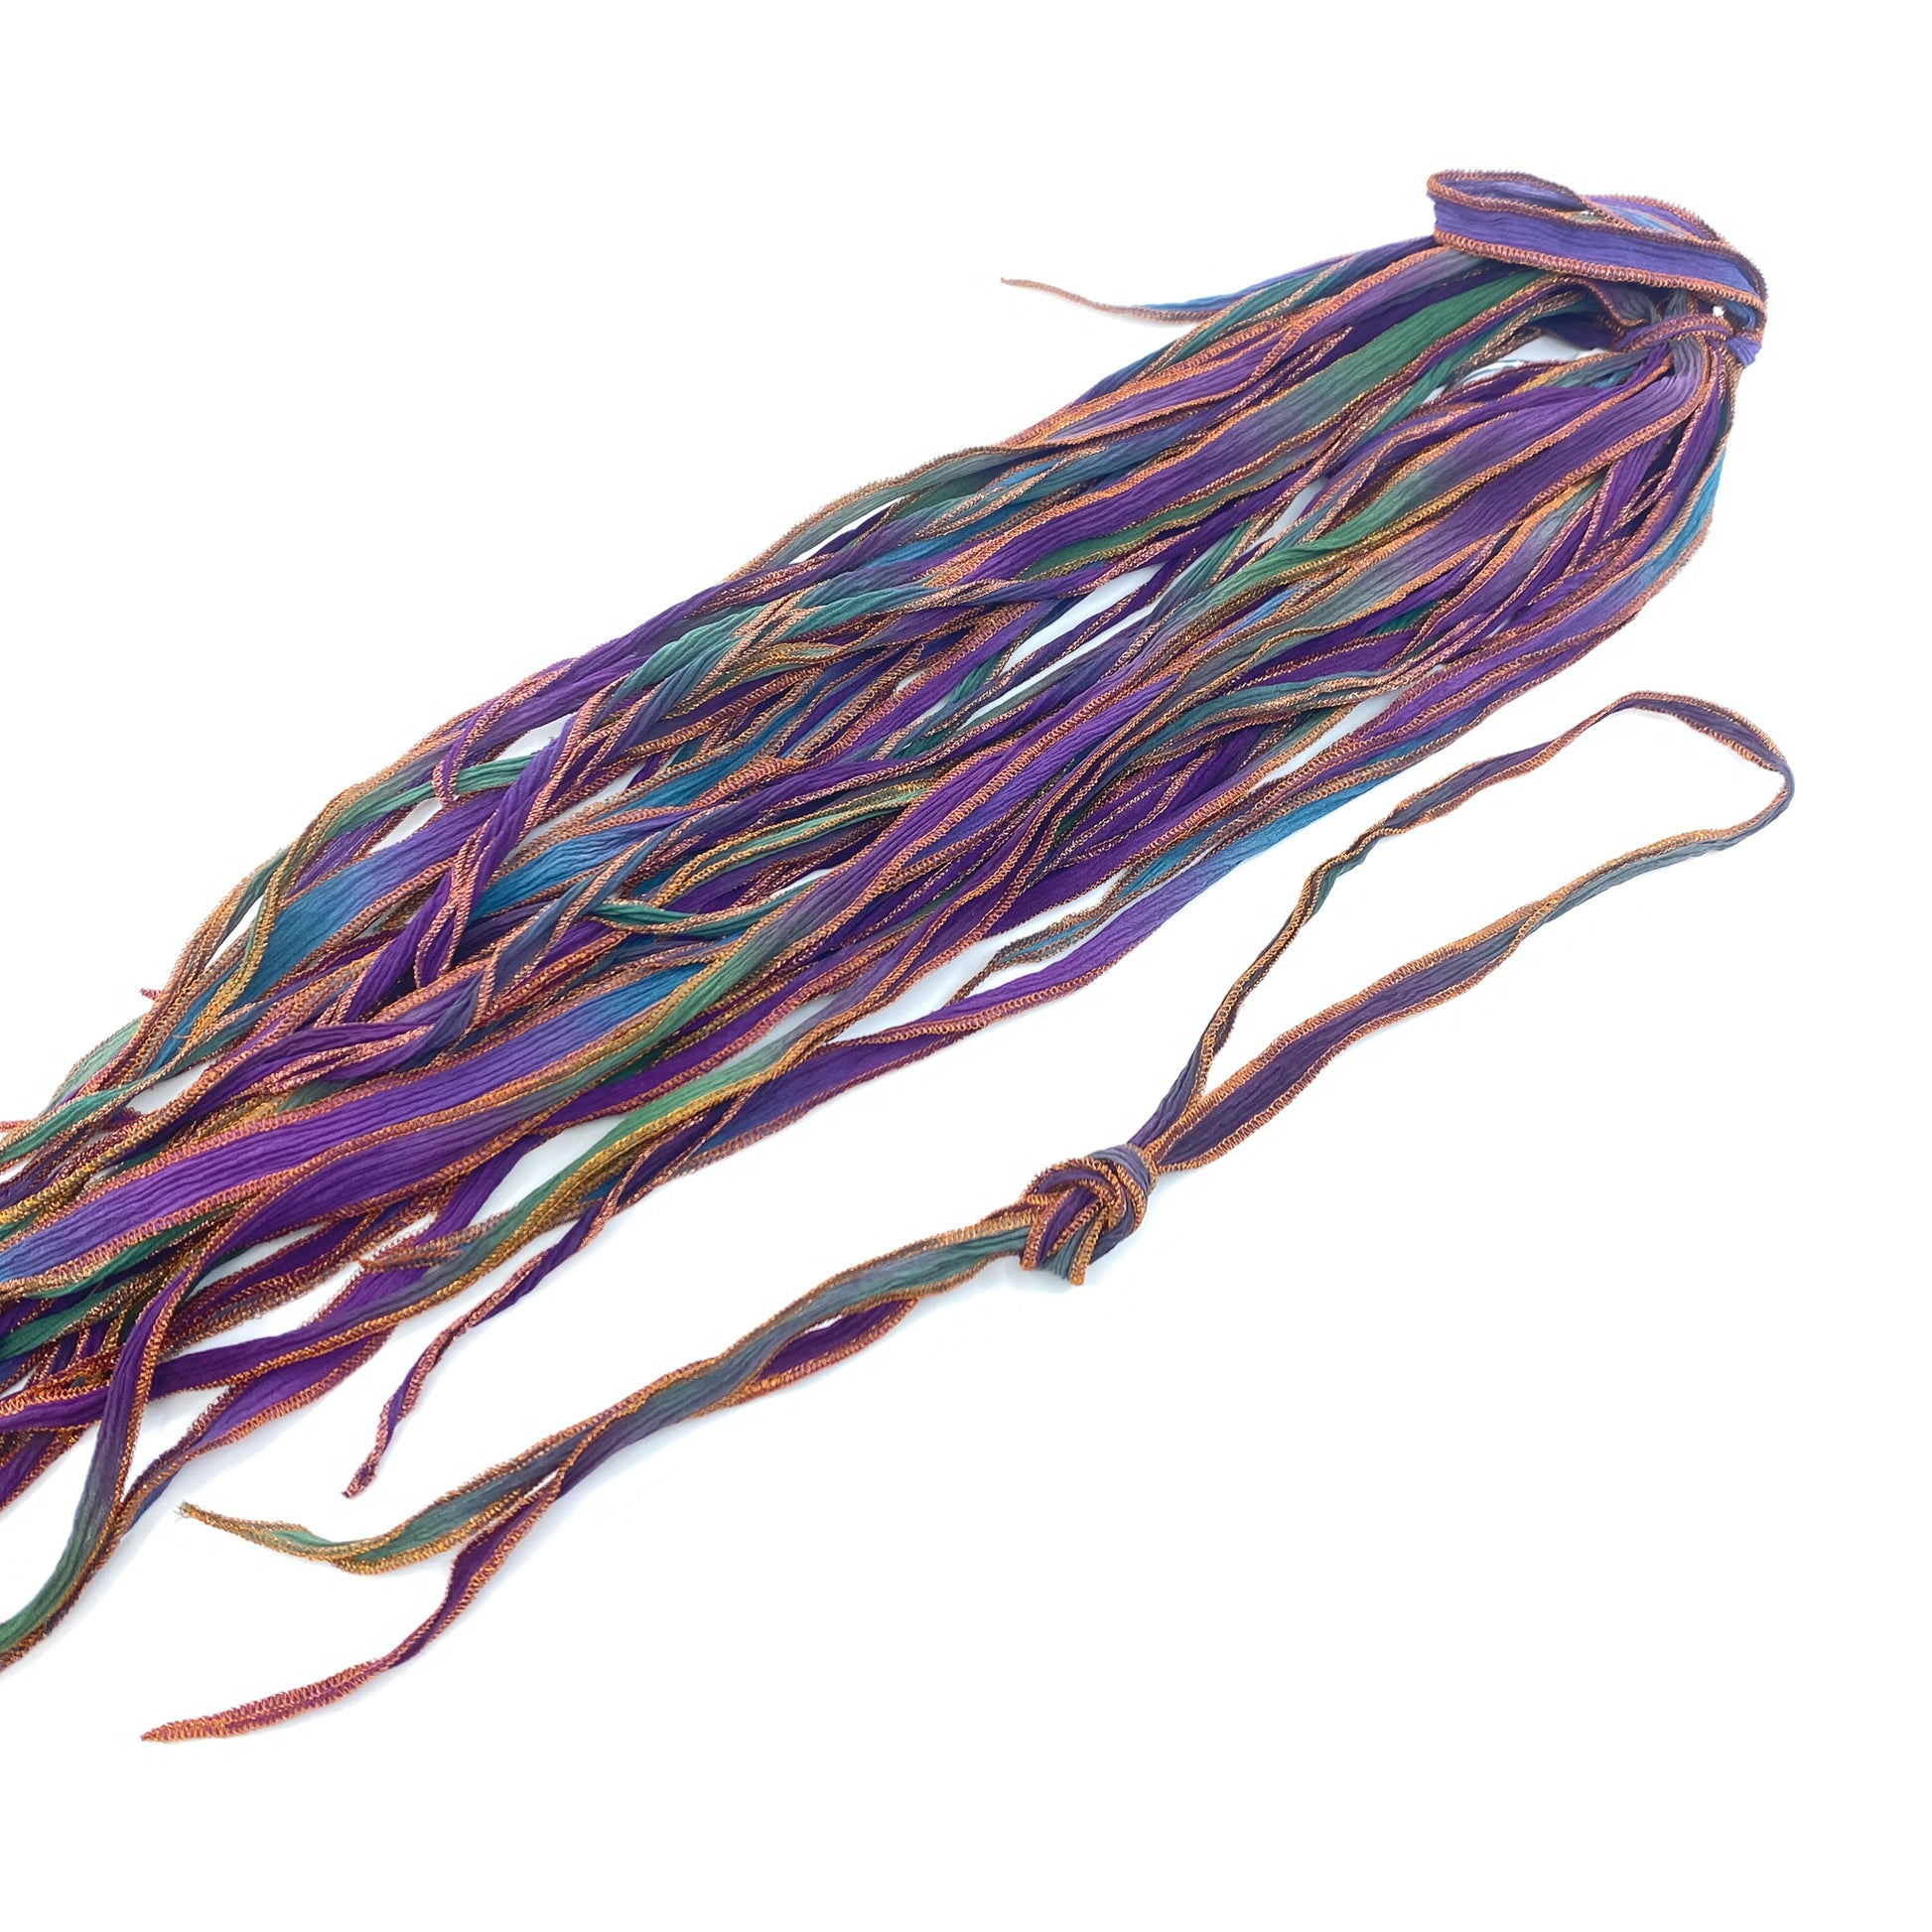 Mermaid Silk Ribbon - Hand-Dyed!